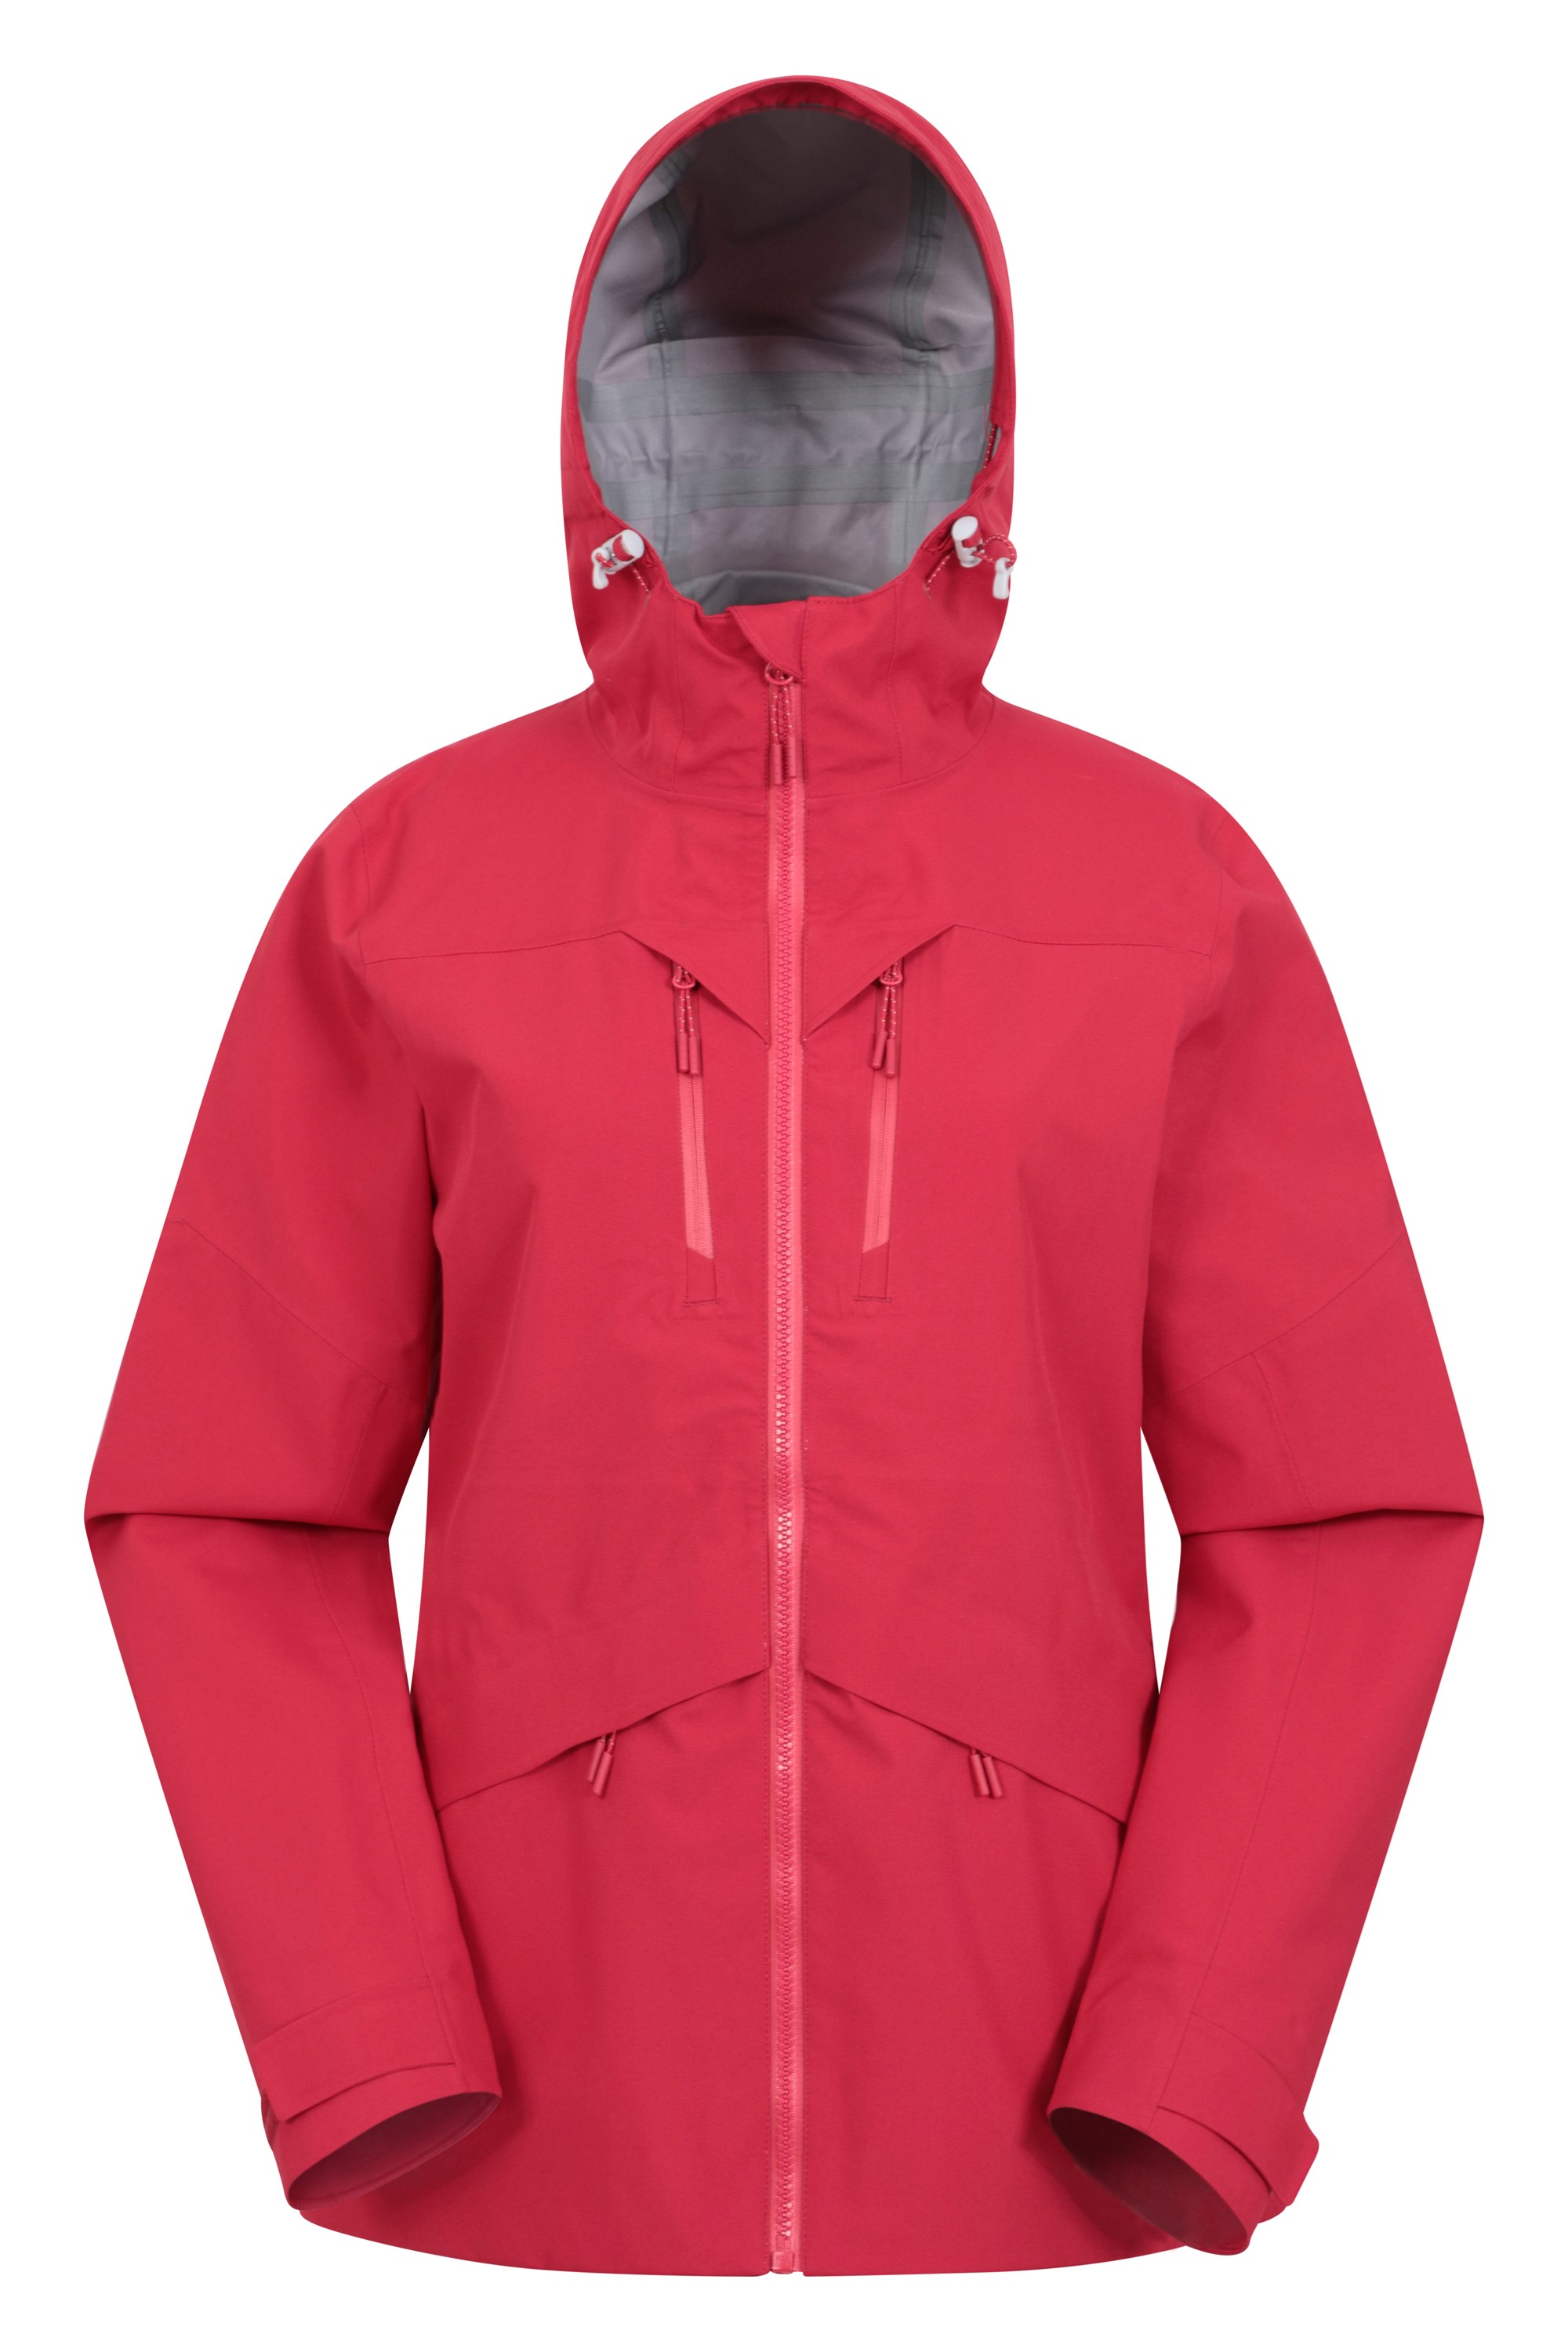 3 Layer Rhine Extreme Womens Waterproof Jacket - Red